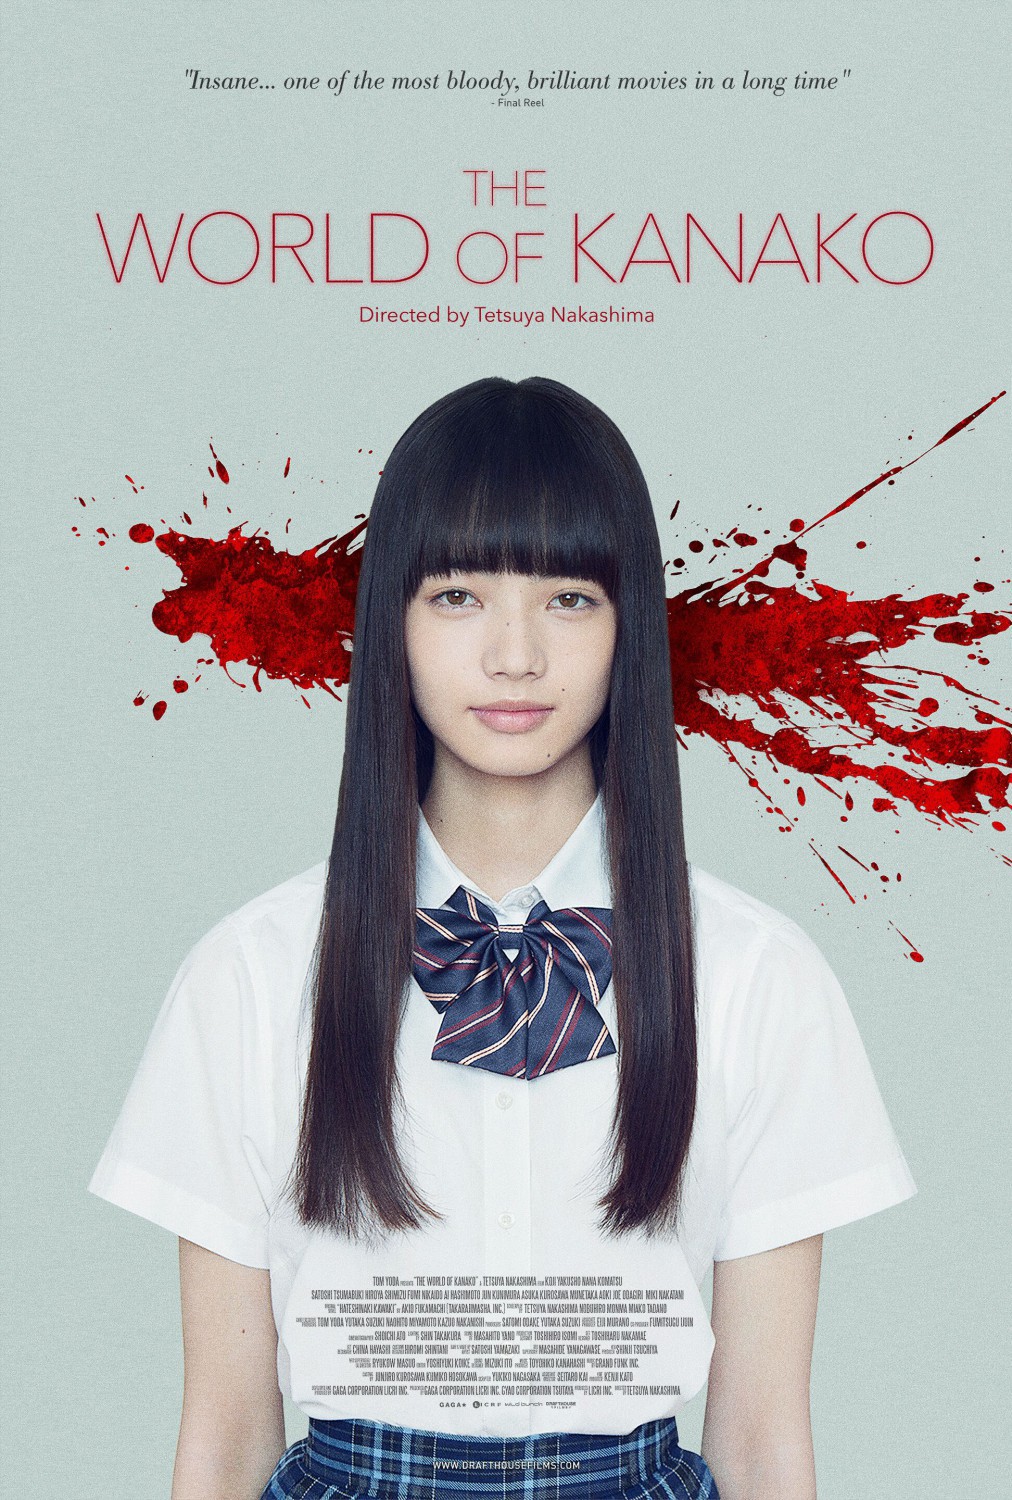 Stiahni si Filmy s titulkama Kawaki (2014)[720p] = CSFD 64%